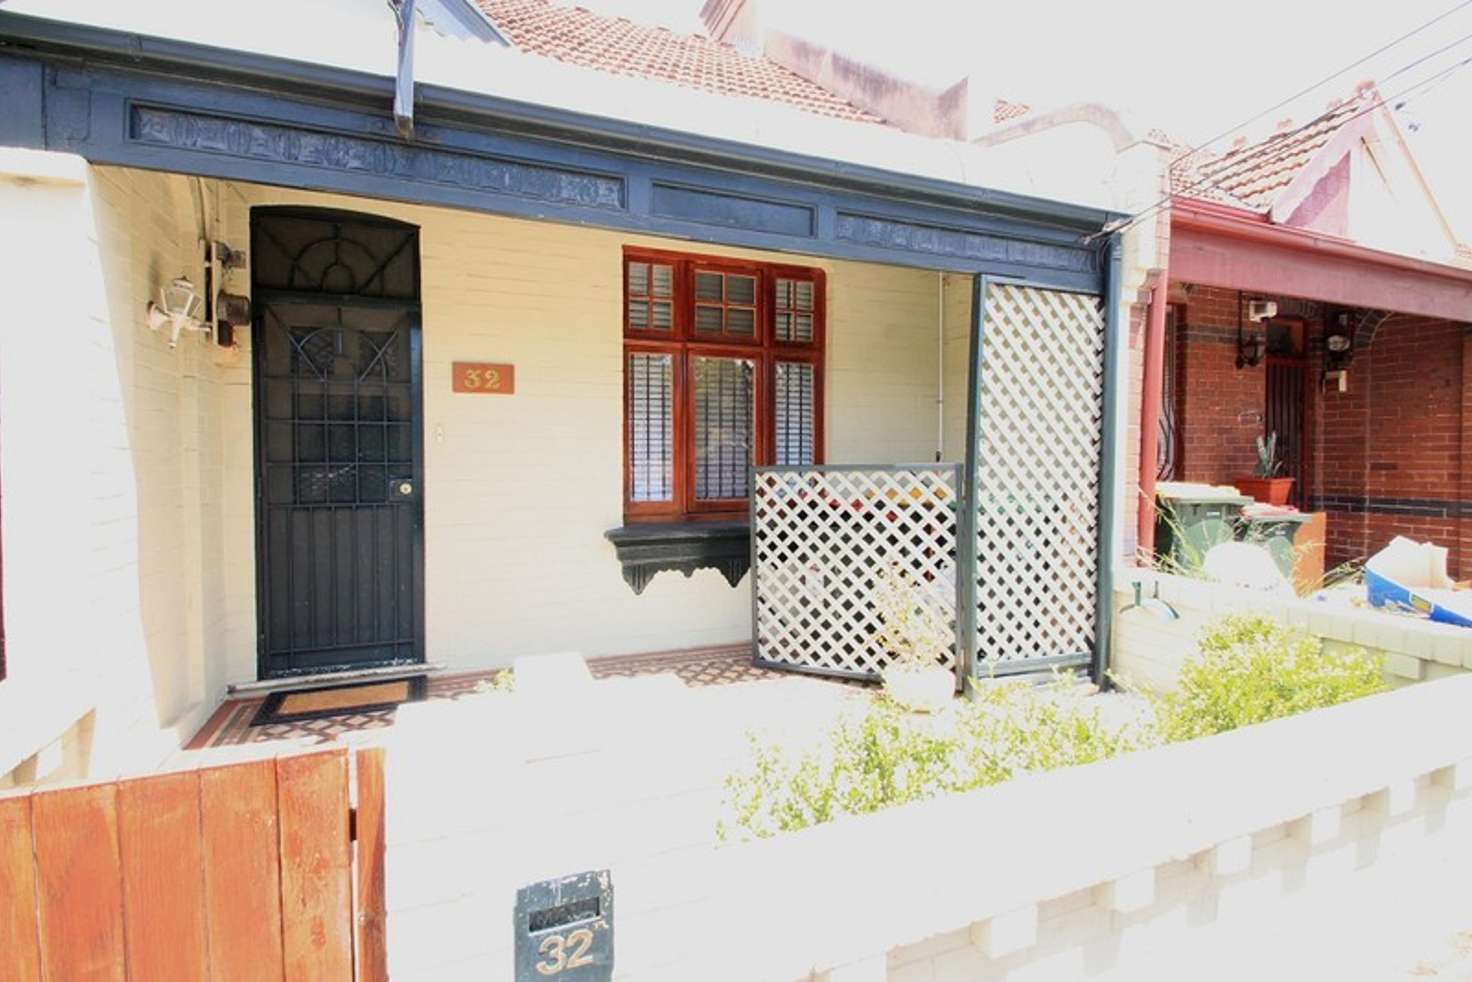 Main view of Homely house listing, 32 Calvert Street, Marrickville NSW 2204